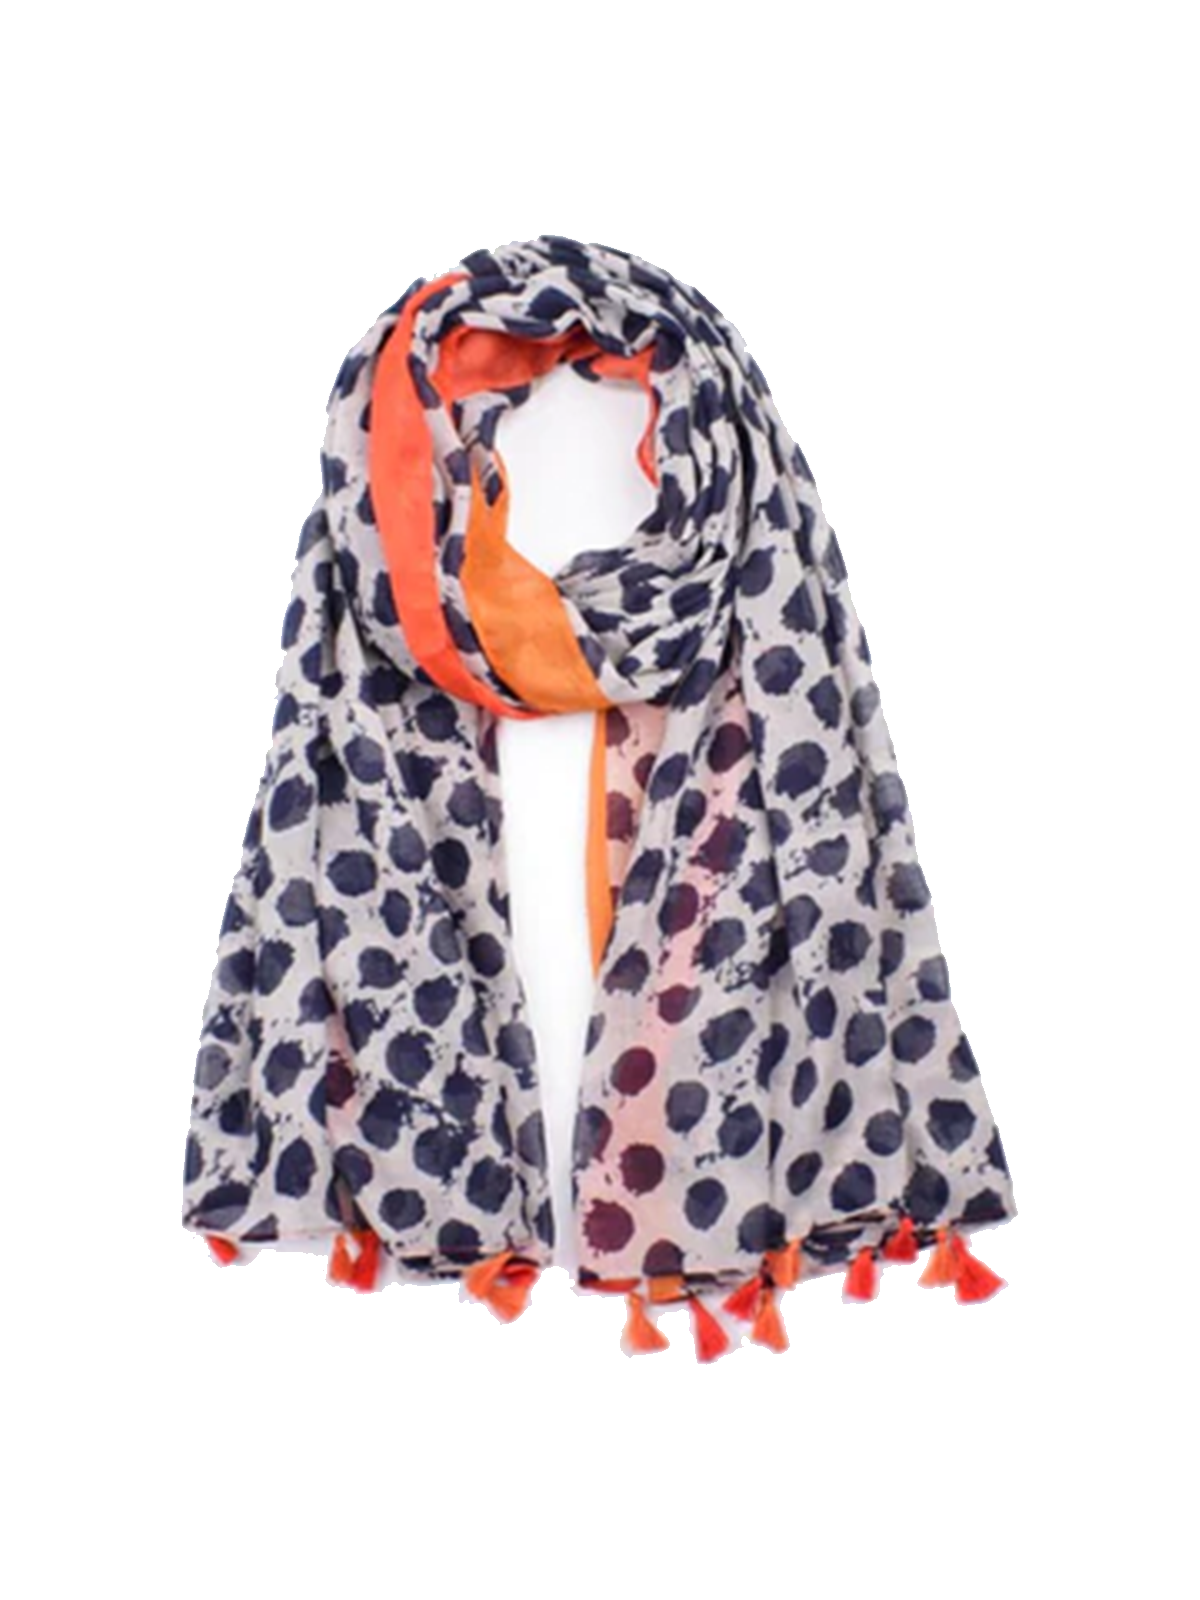 White and blue polka dot scarf